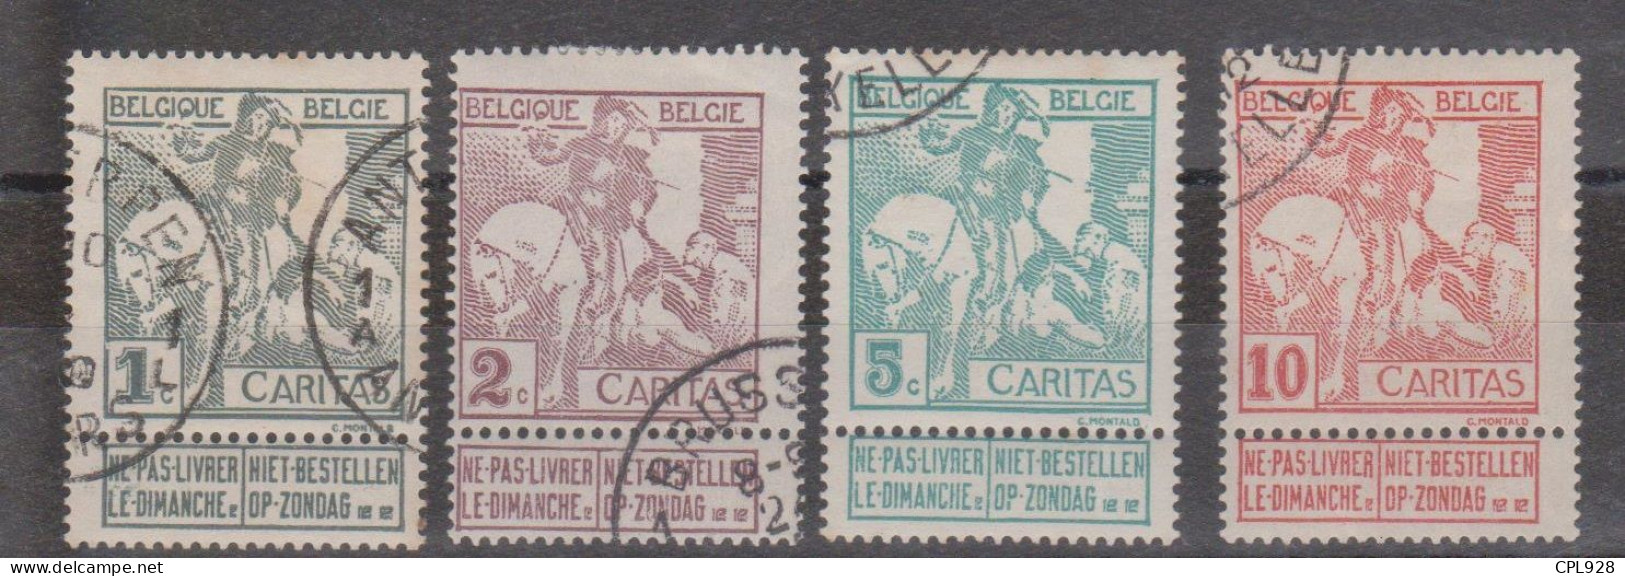 Belgique N° 84 à 87 - 1910-1911 Caritas